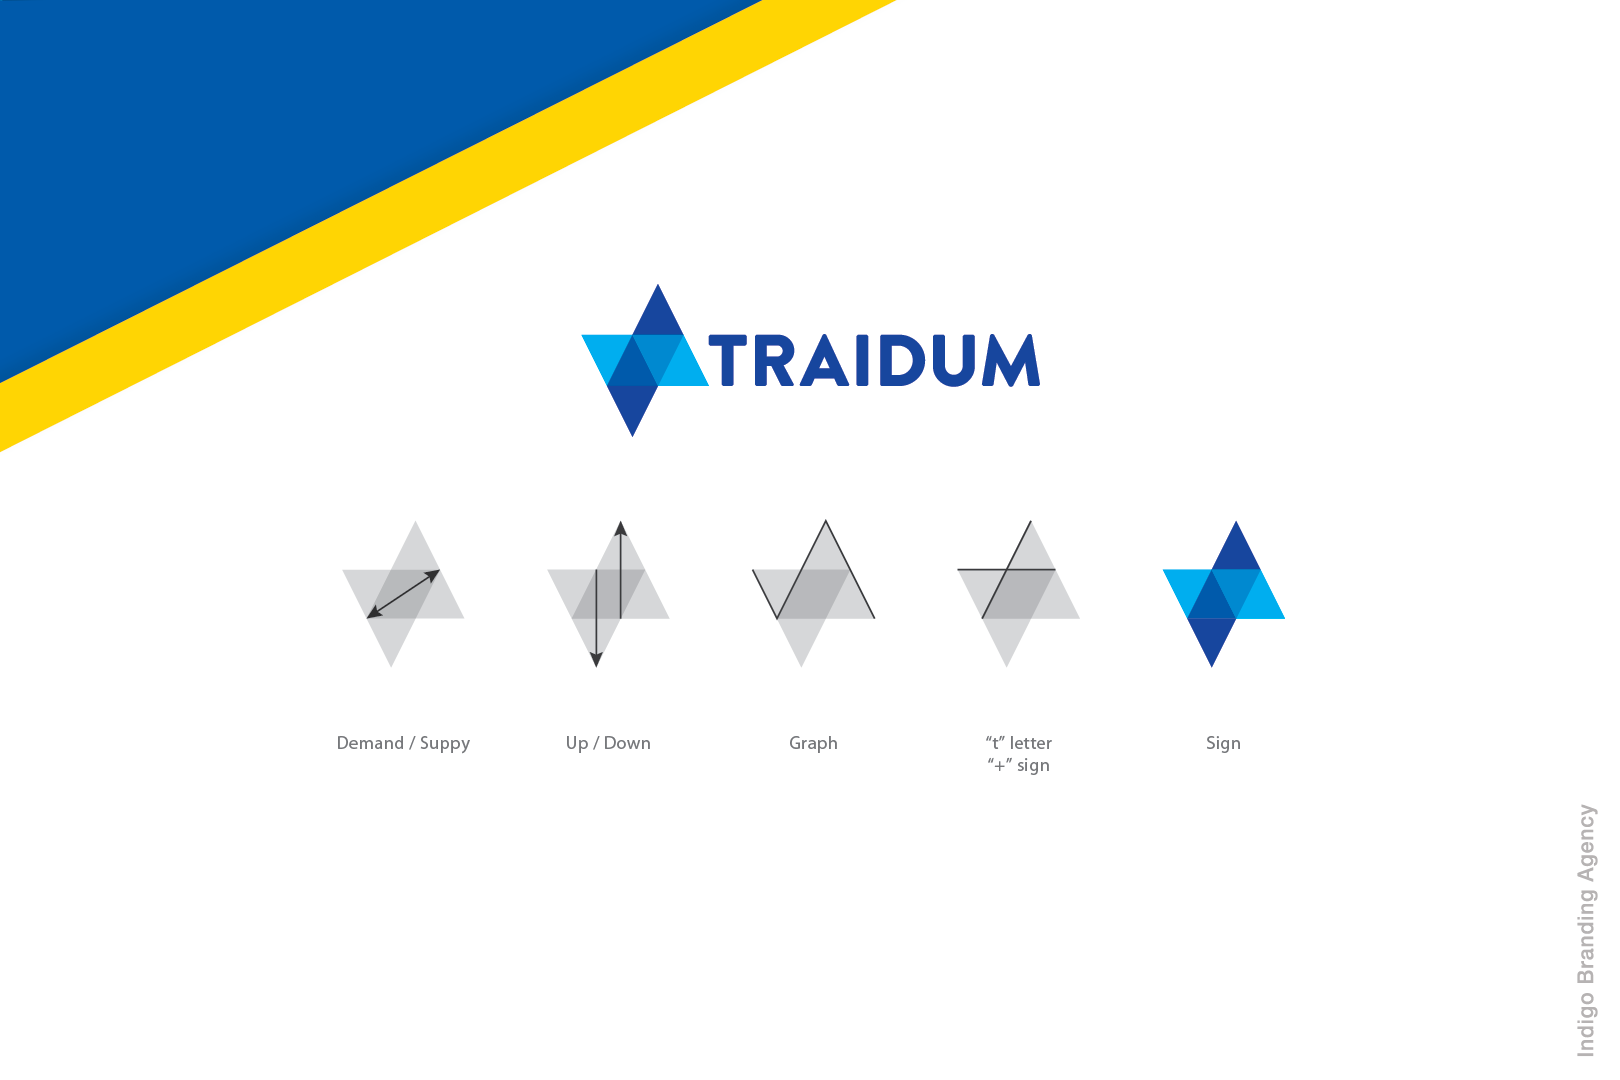 Traidum branding and logo design by Indigo branding